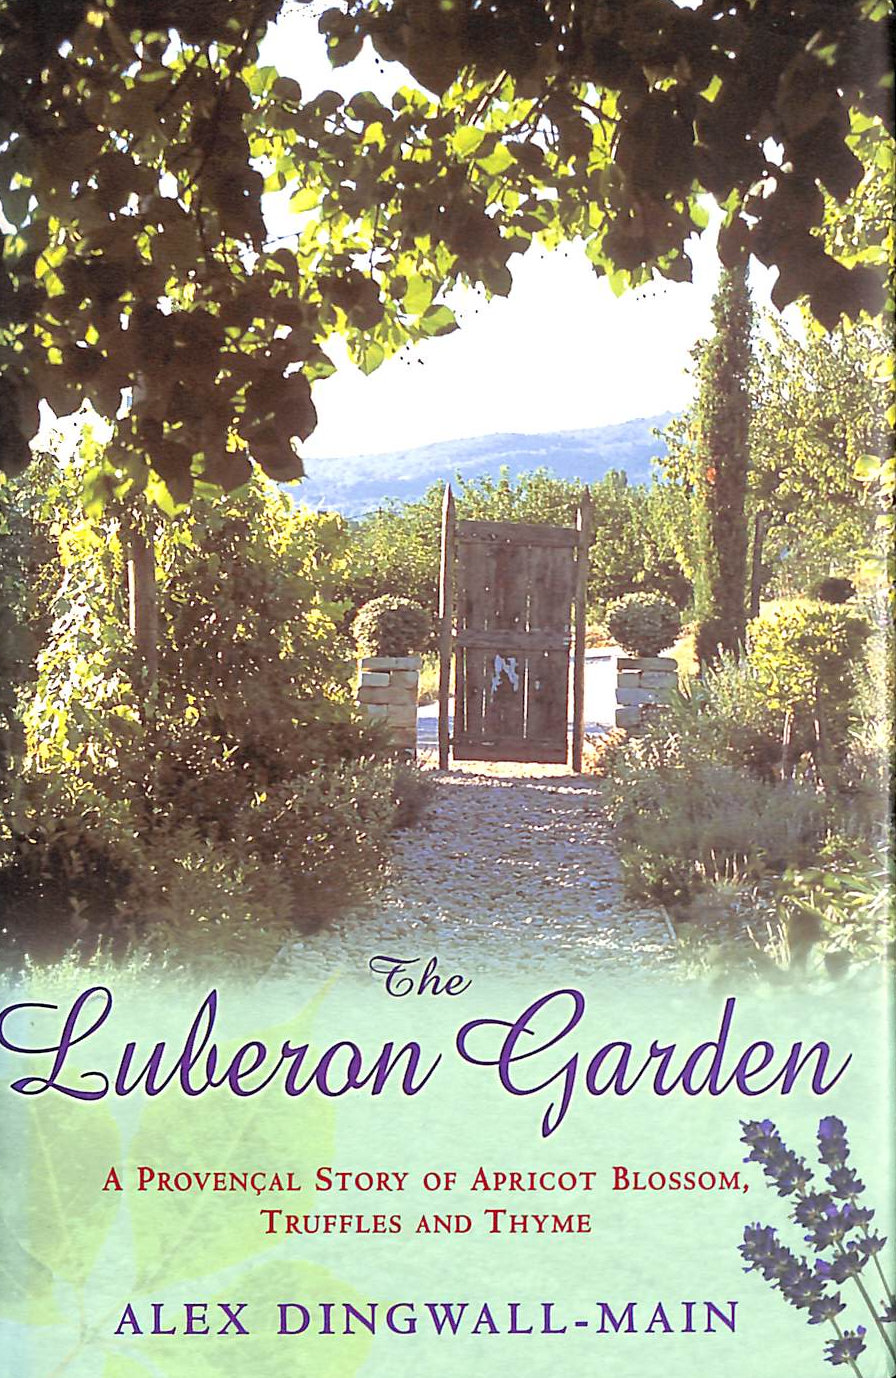 DINGWALL-MAIN, ALEX - The Luberon Garden